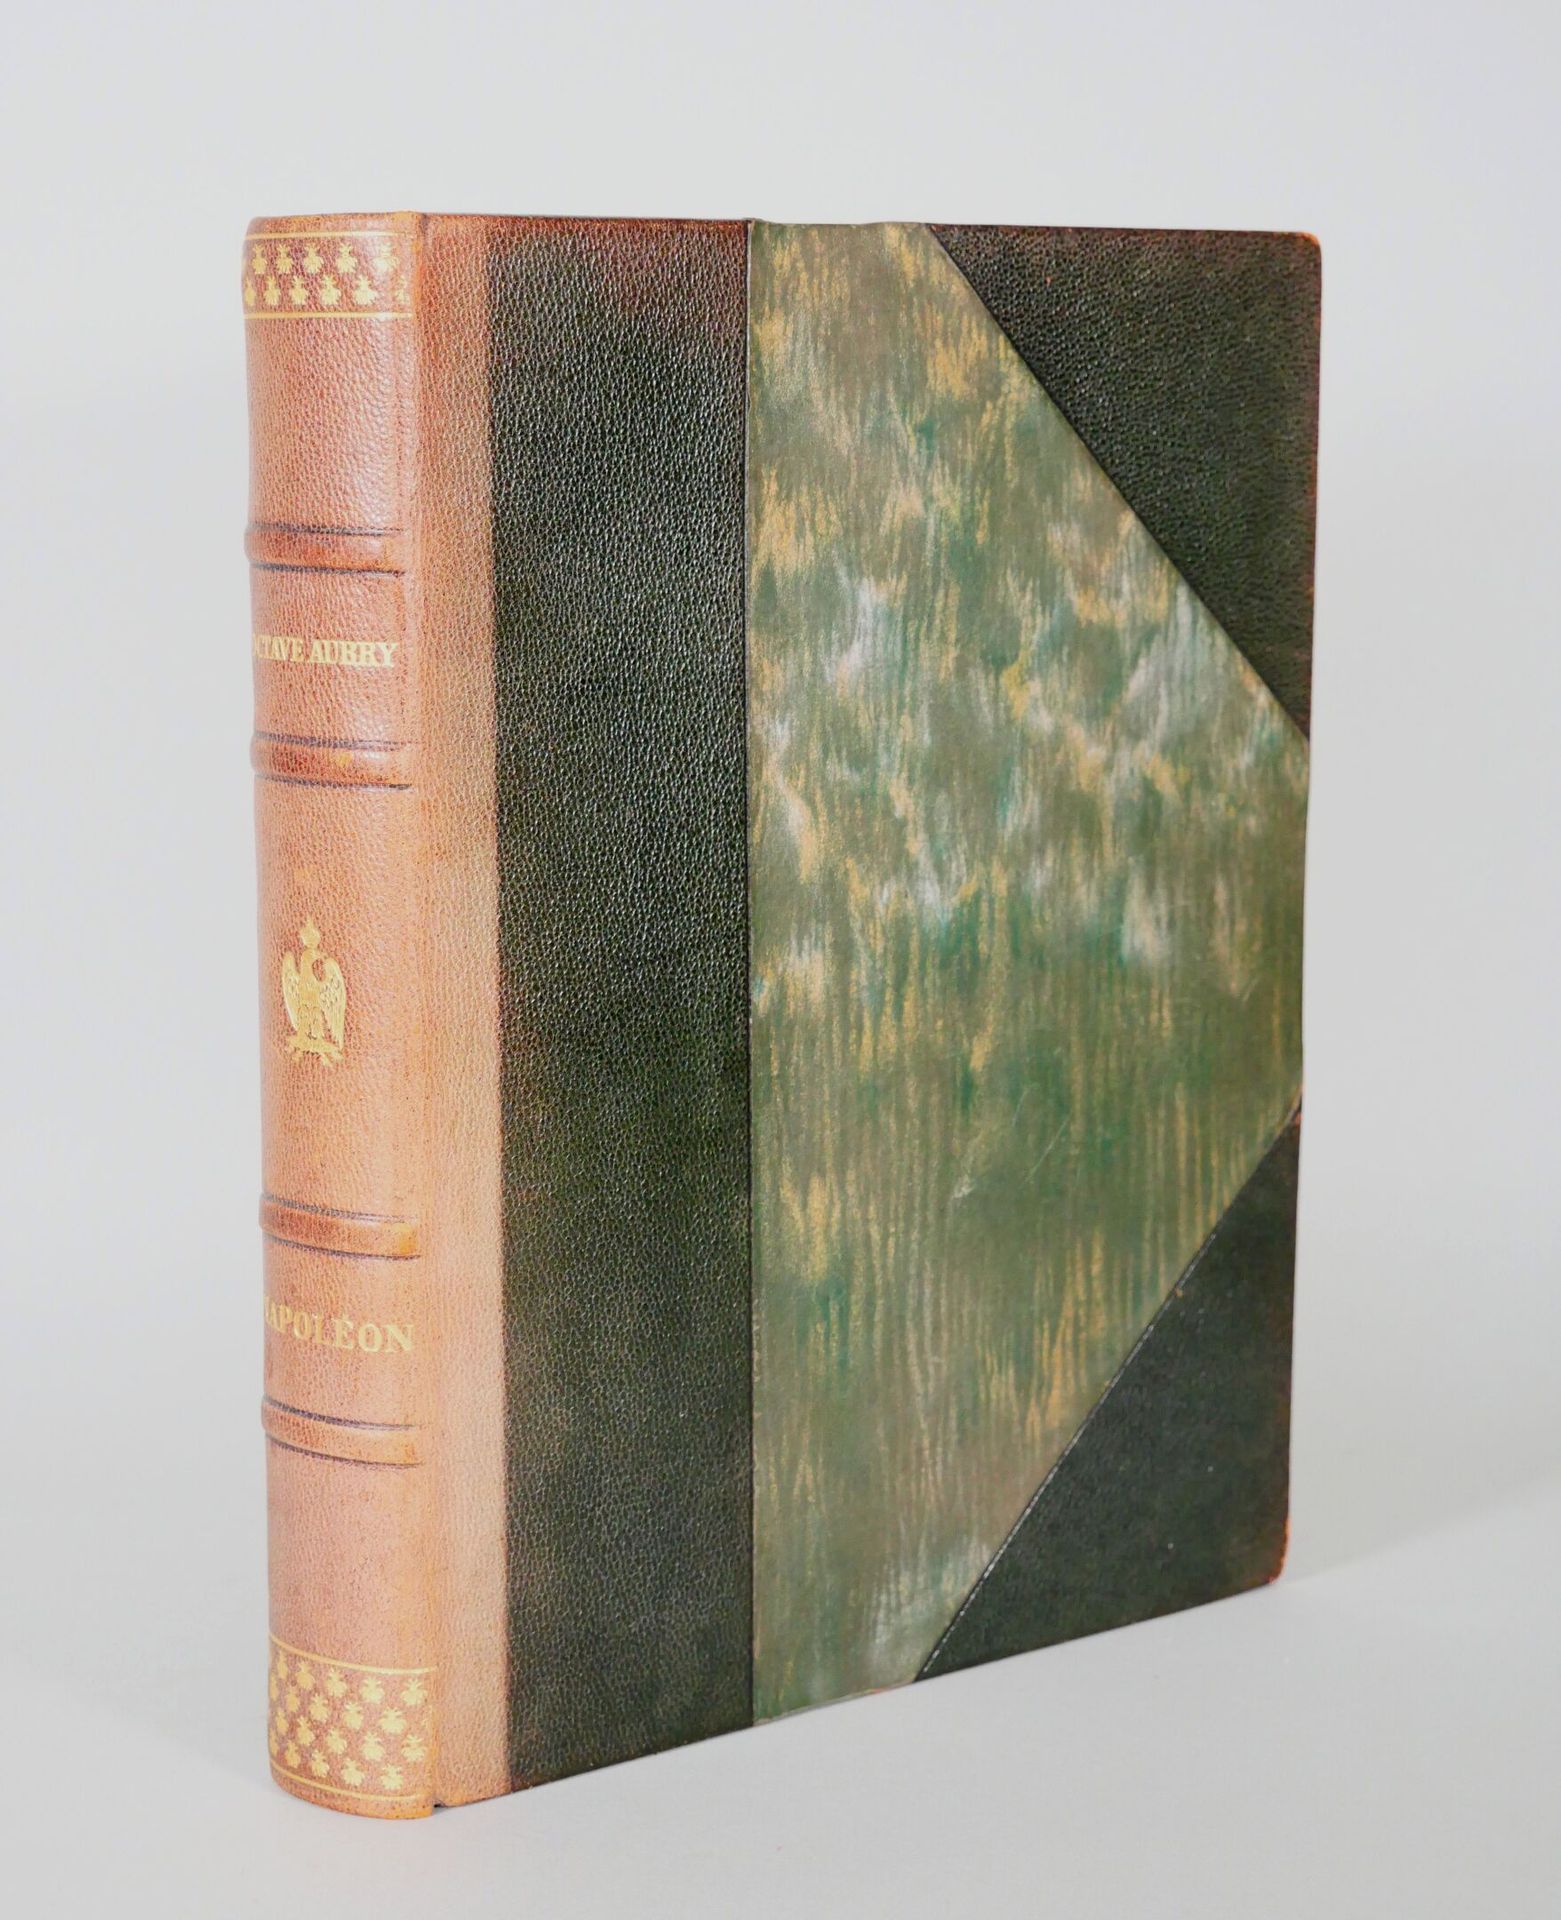 Null AUBRY Octave.
Napoléon, Flammarion 1936, in-4, mezza pelle con angoli, dors&hellip;